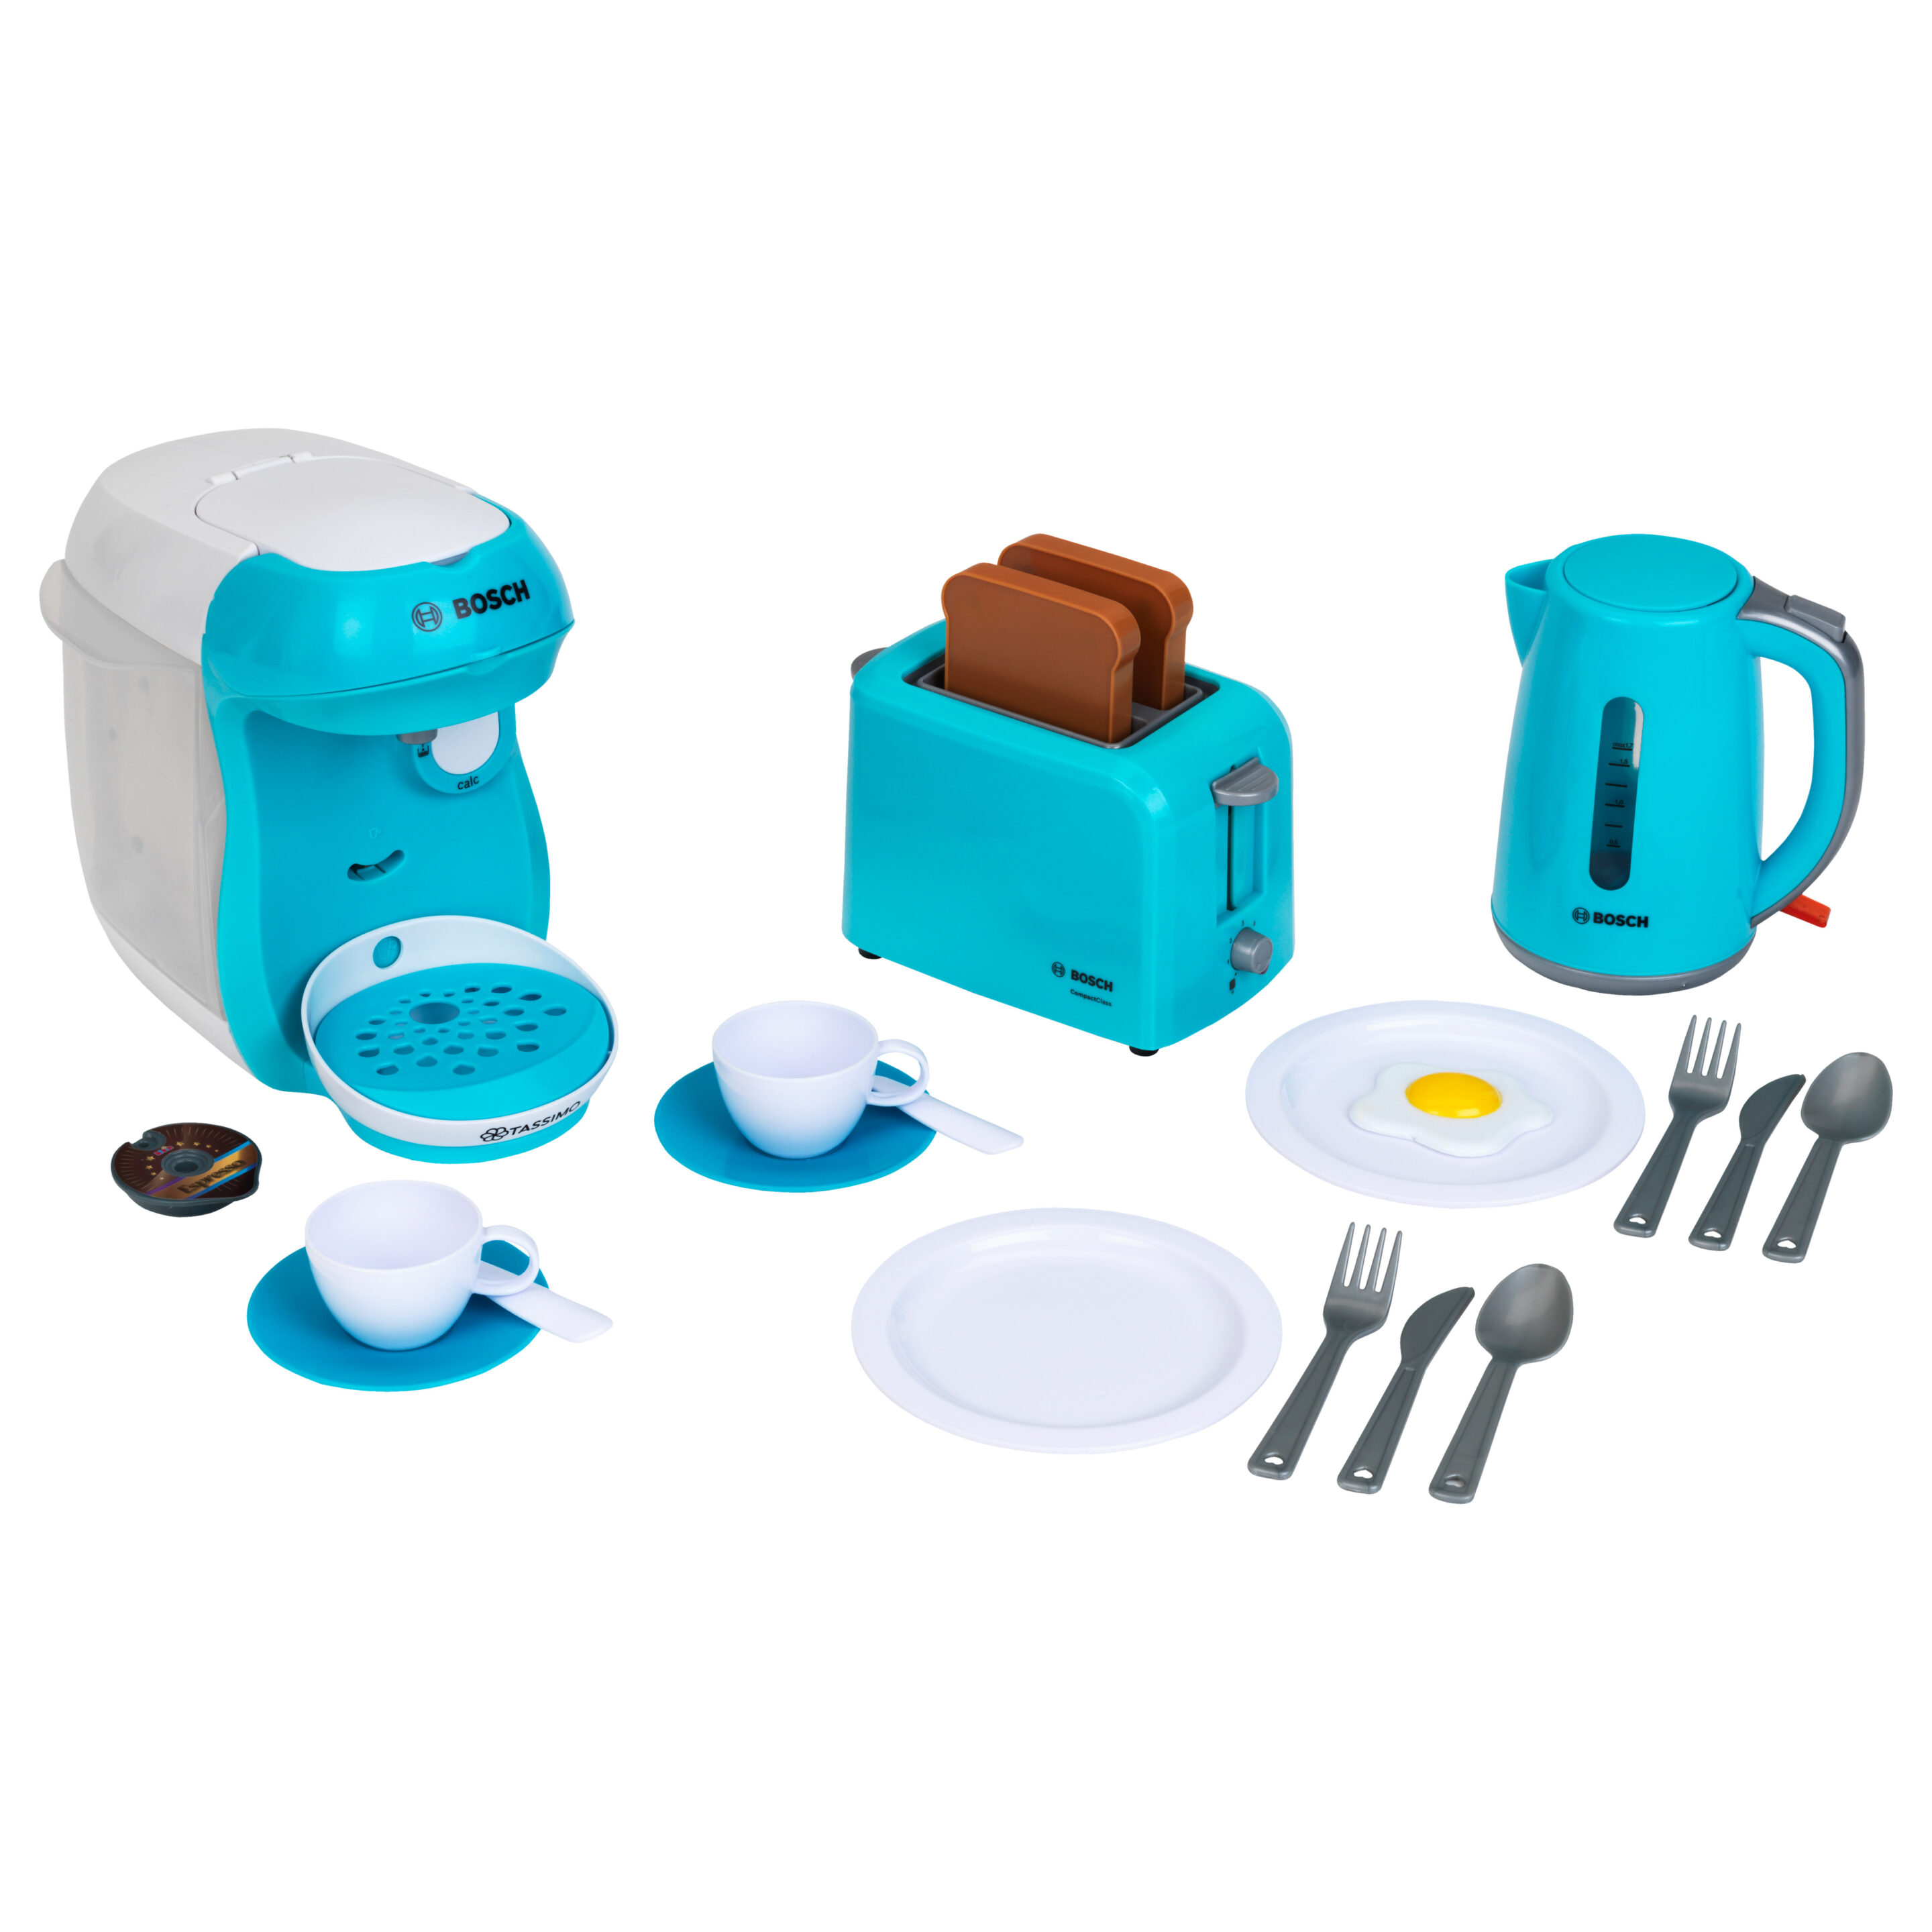 Bosch - Breakfast Set, turquoise, large